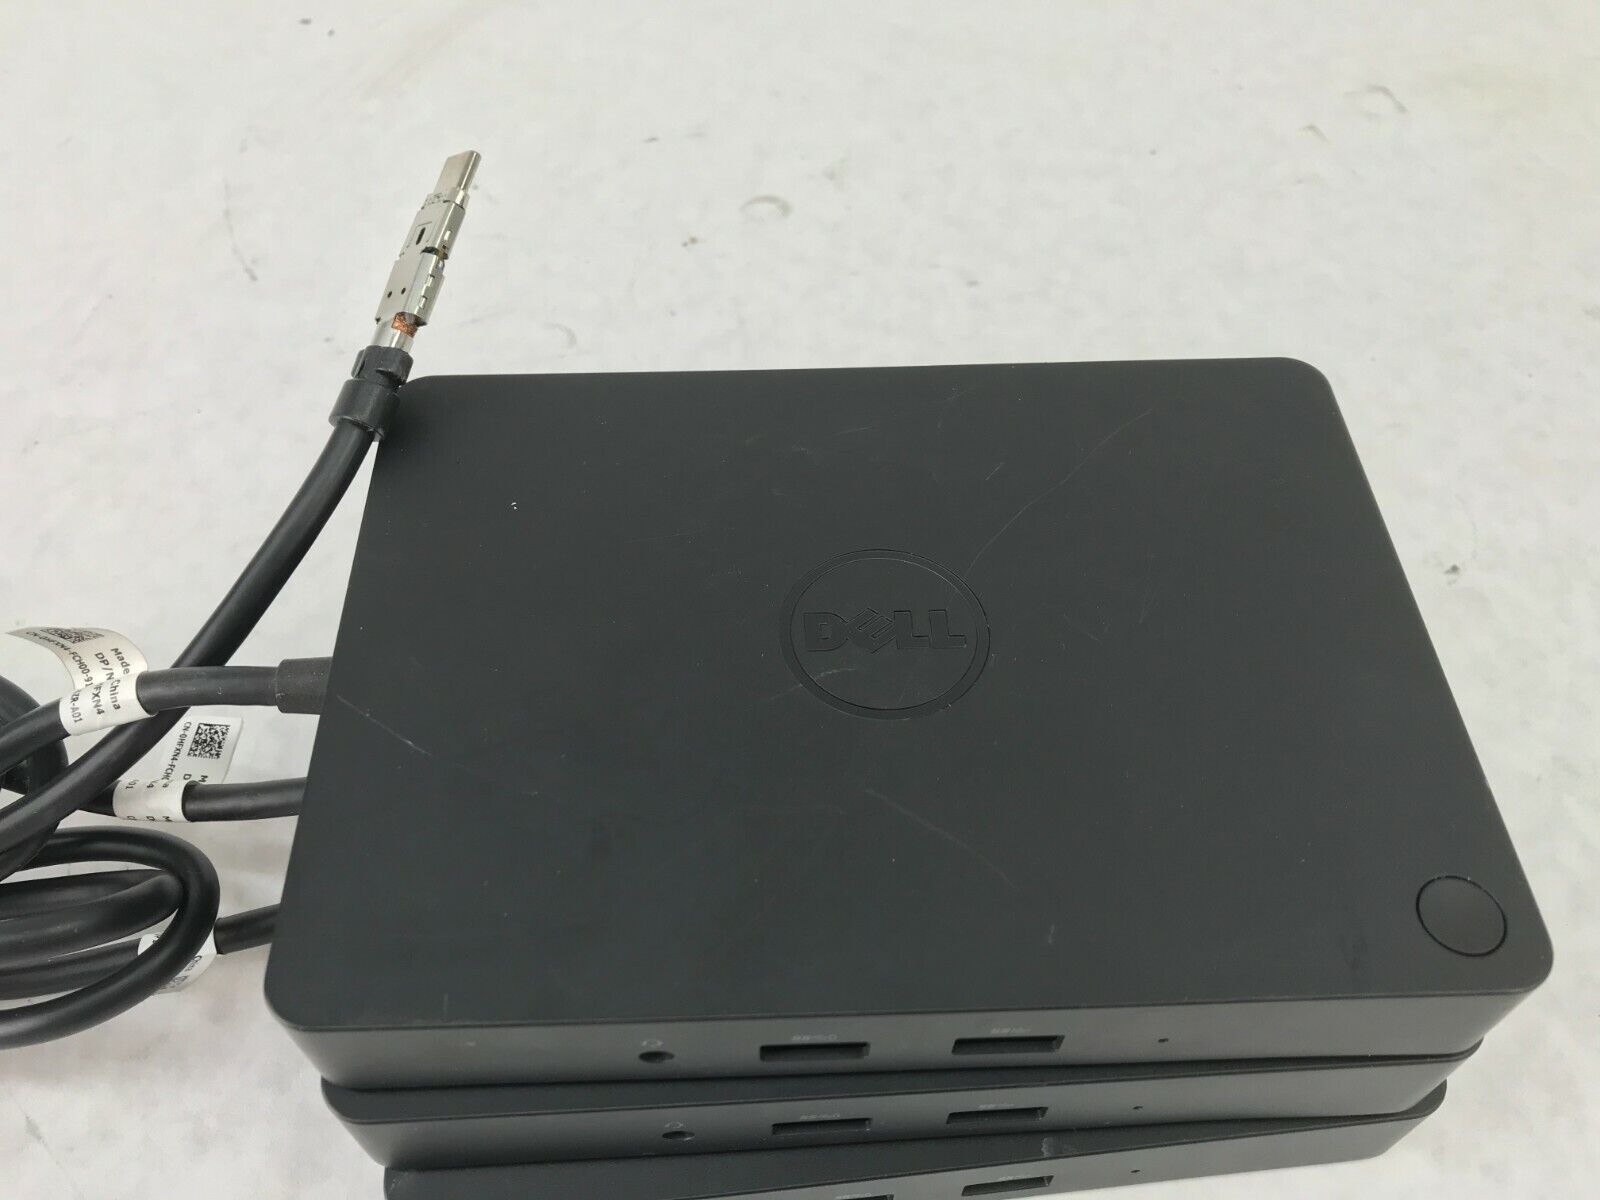 Lot of 3 Dell K17A WD15 Docking Station Thunderbolt USB-C - Plug Cover Missing